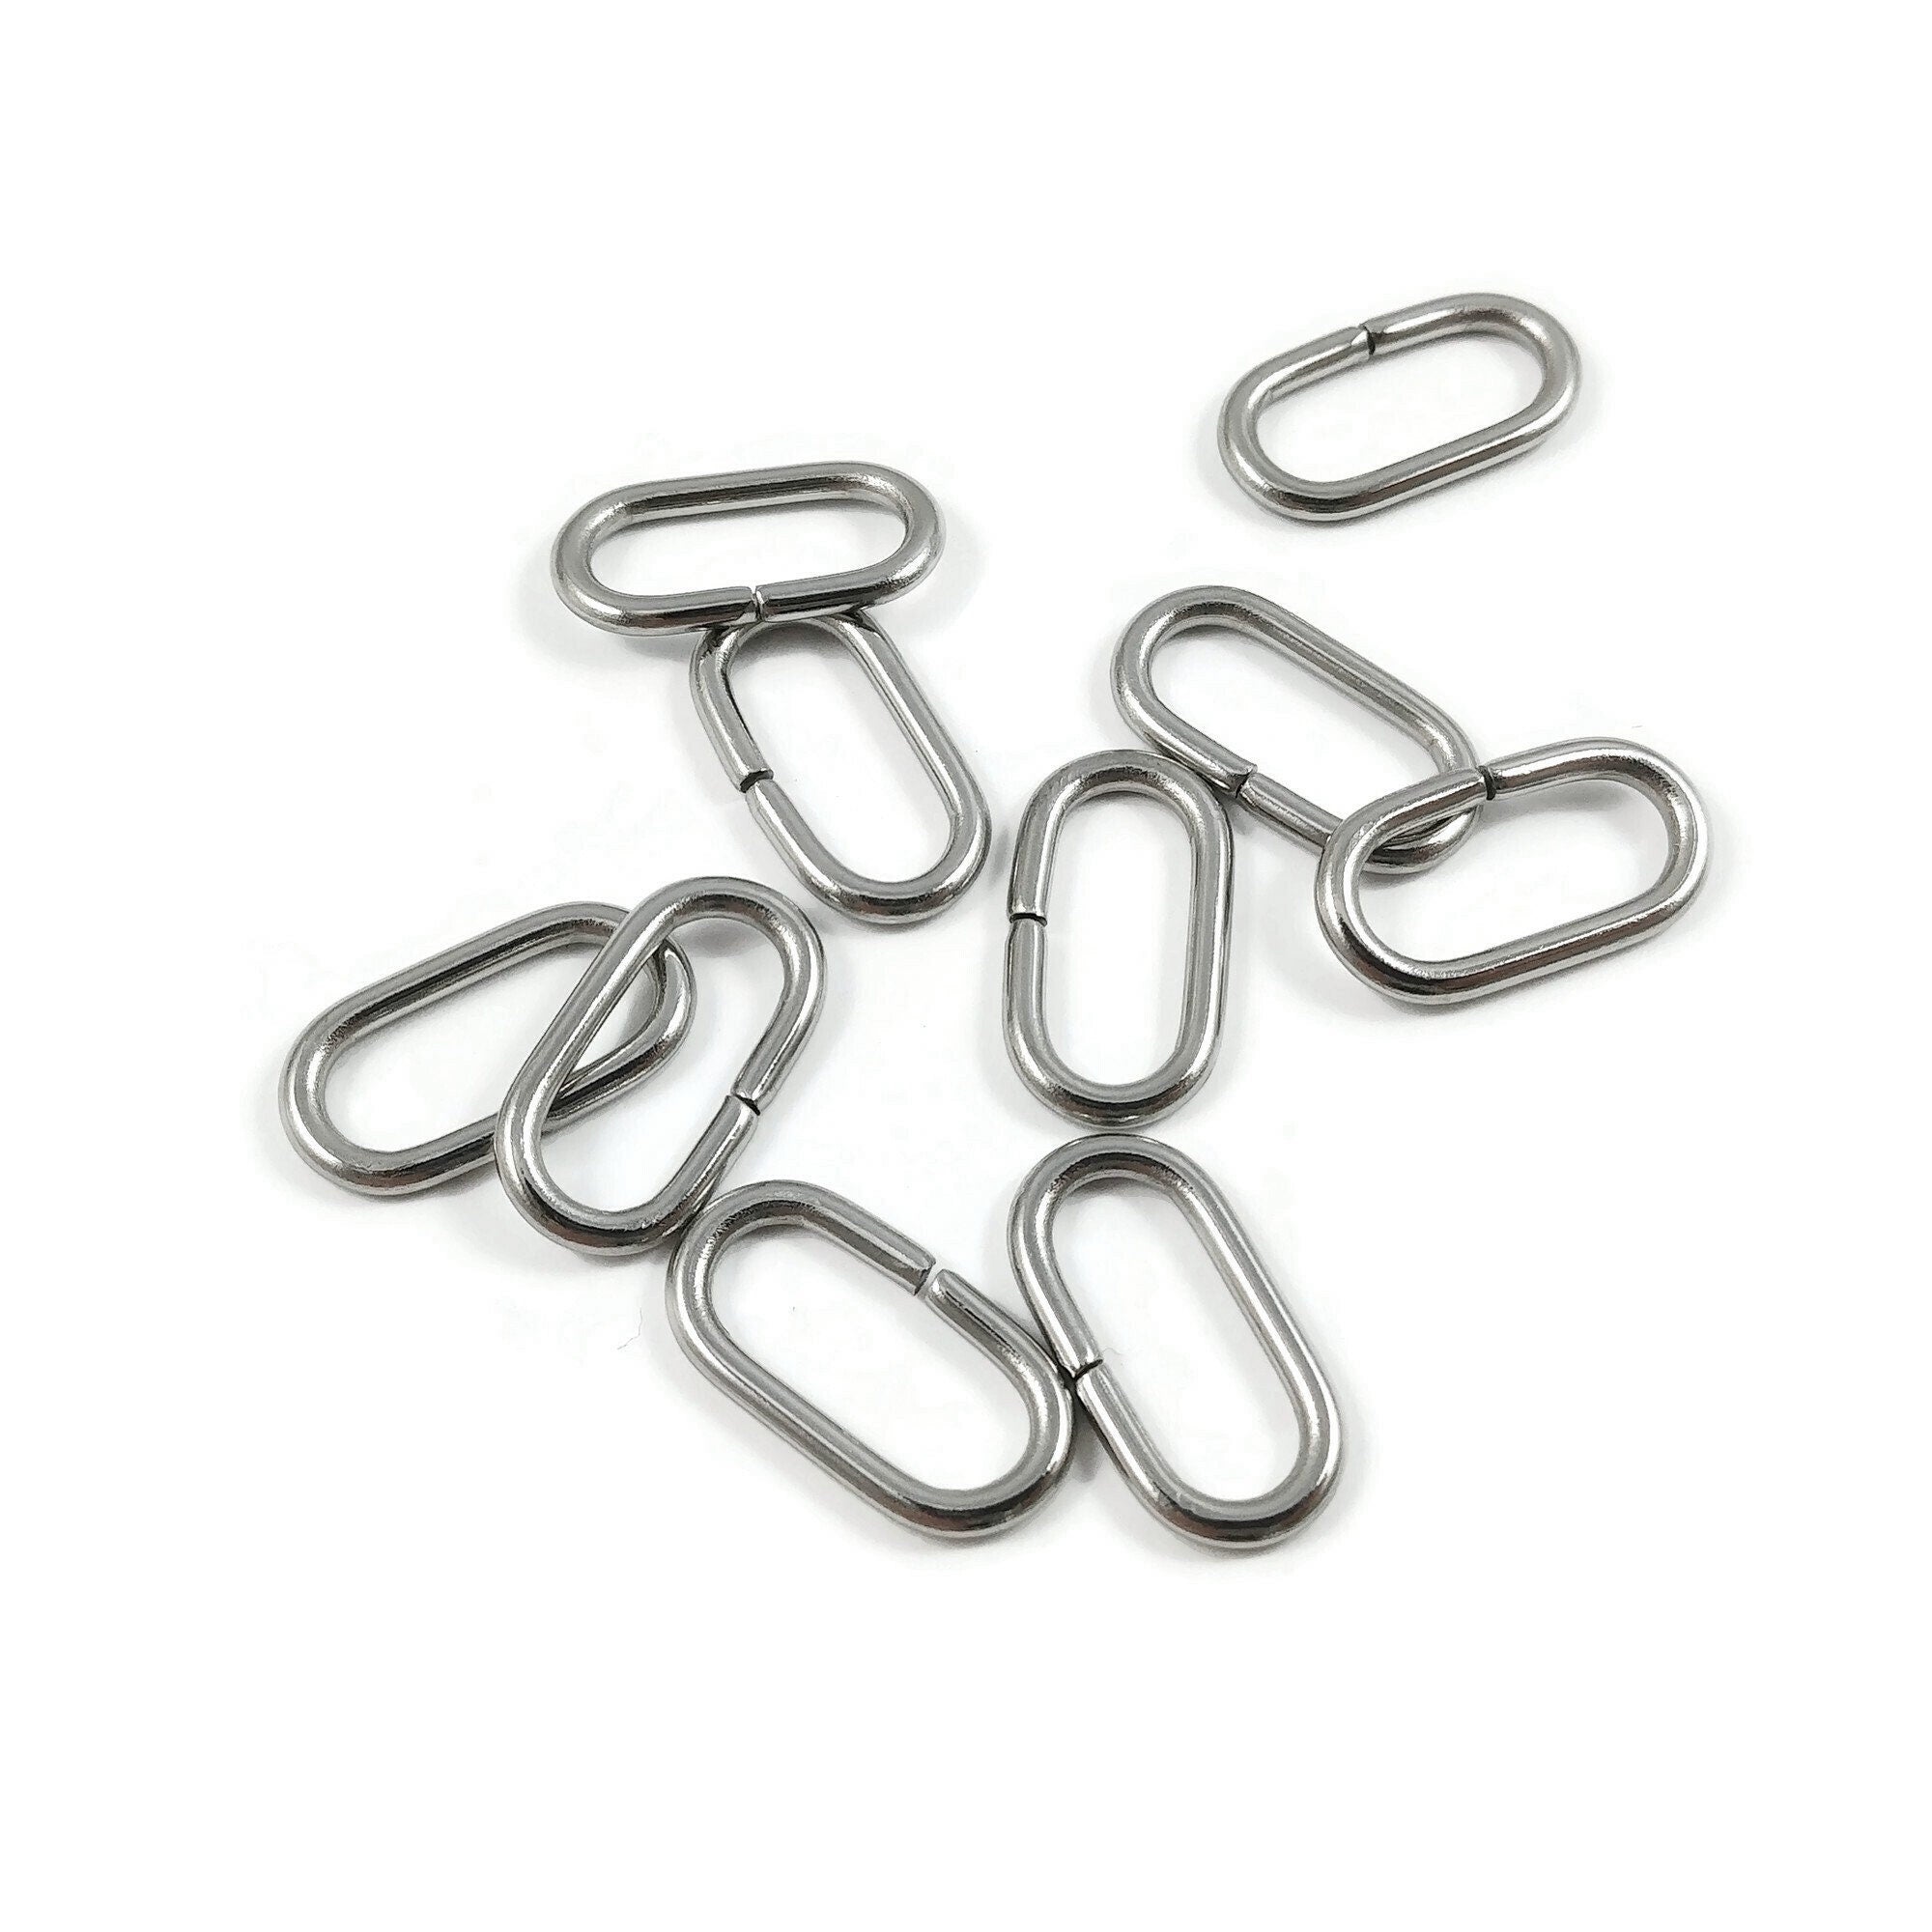 Large oval jump rings, 10pcs stainless steel open jumprings, 12 gauge